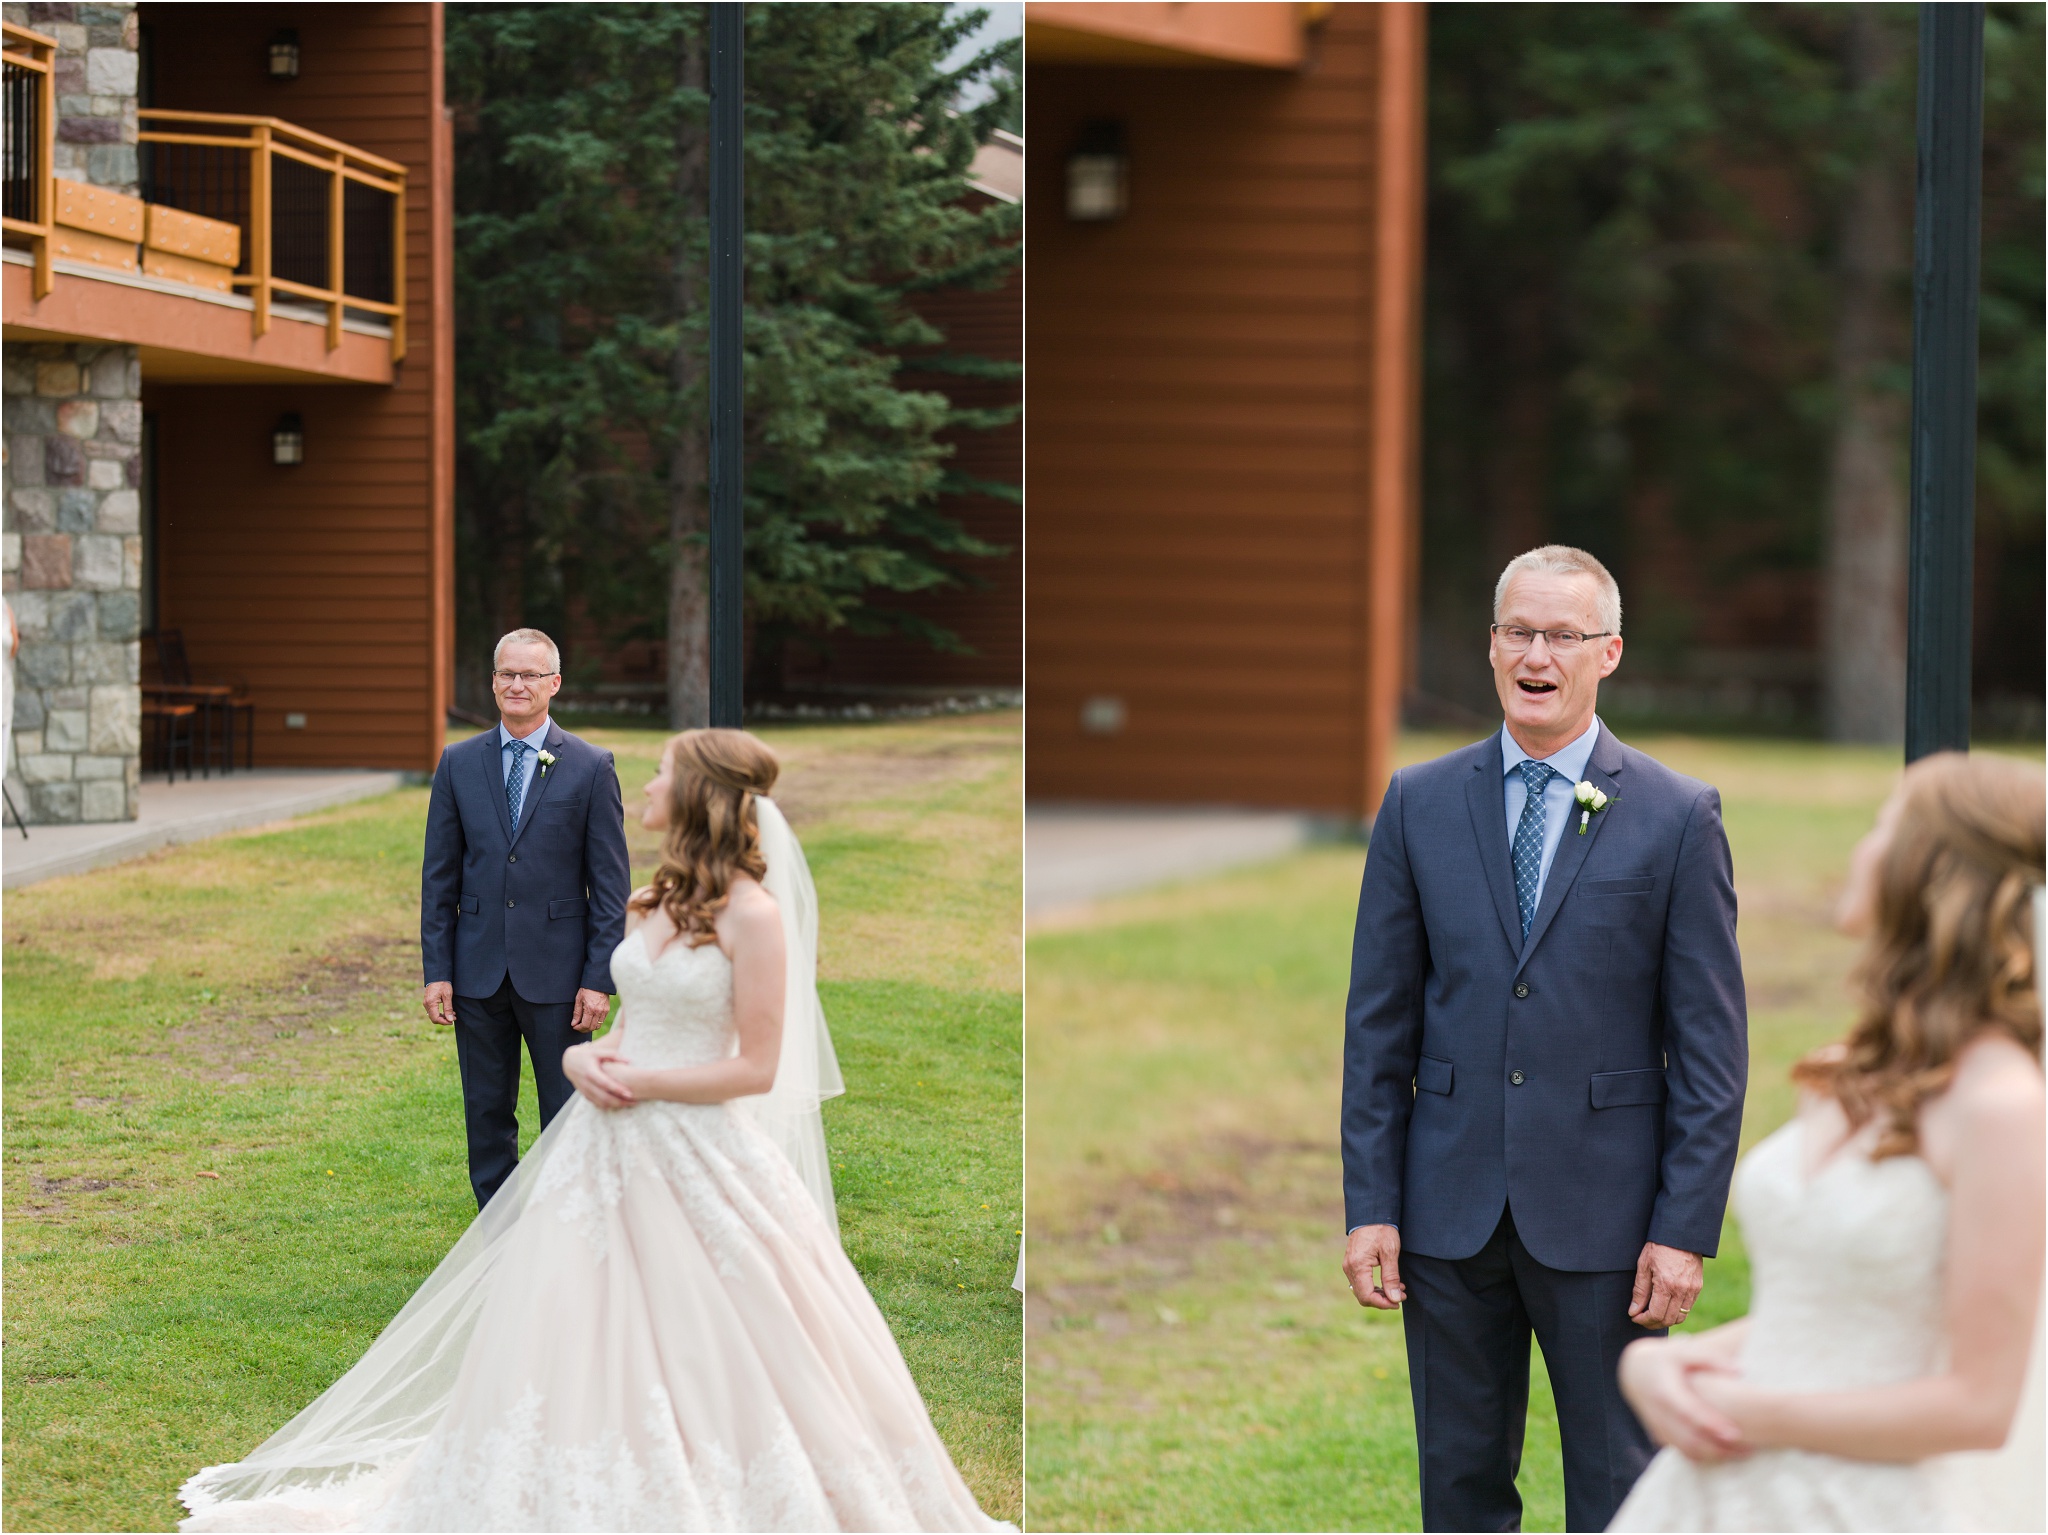 Jasper Park Lodge Wedding Photos edmonton photographer nc photography